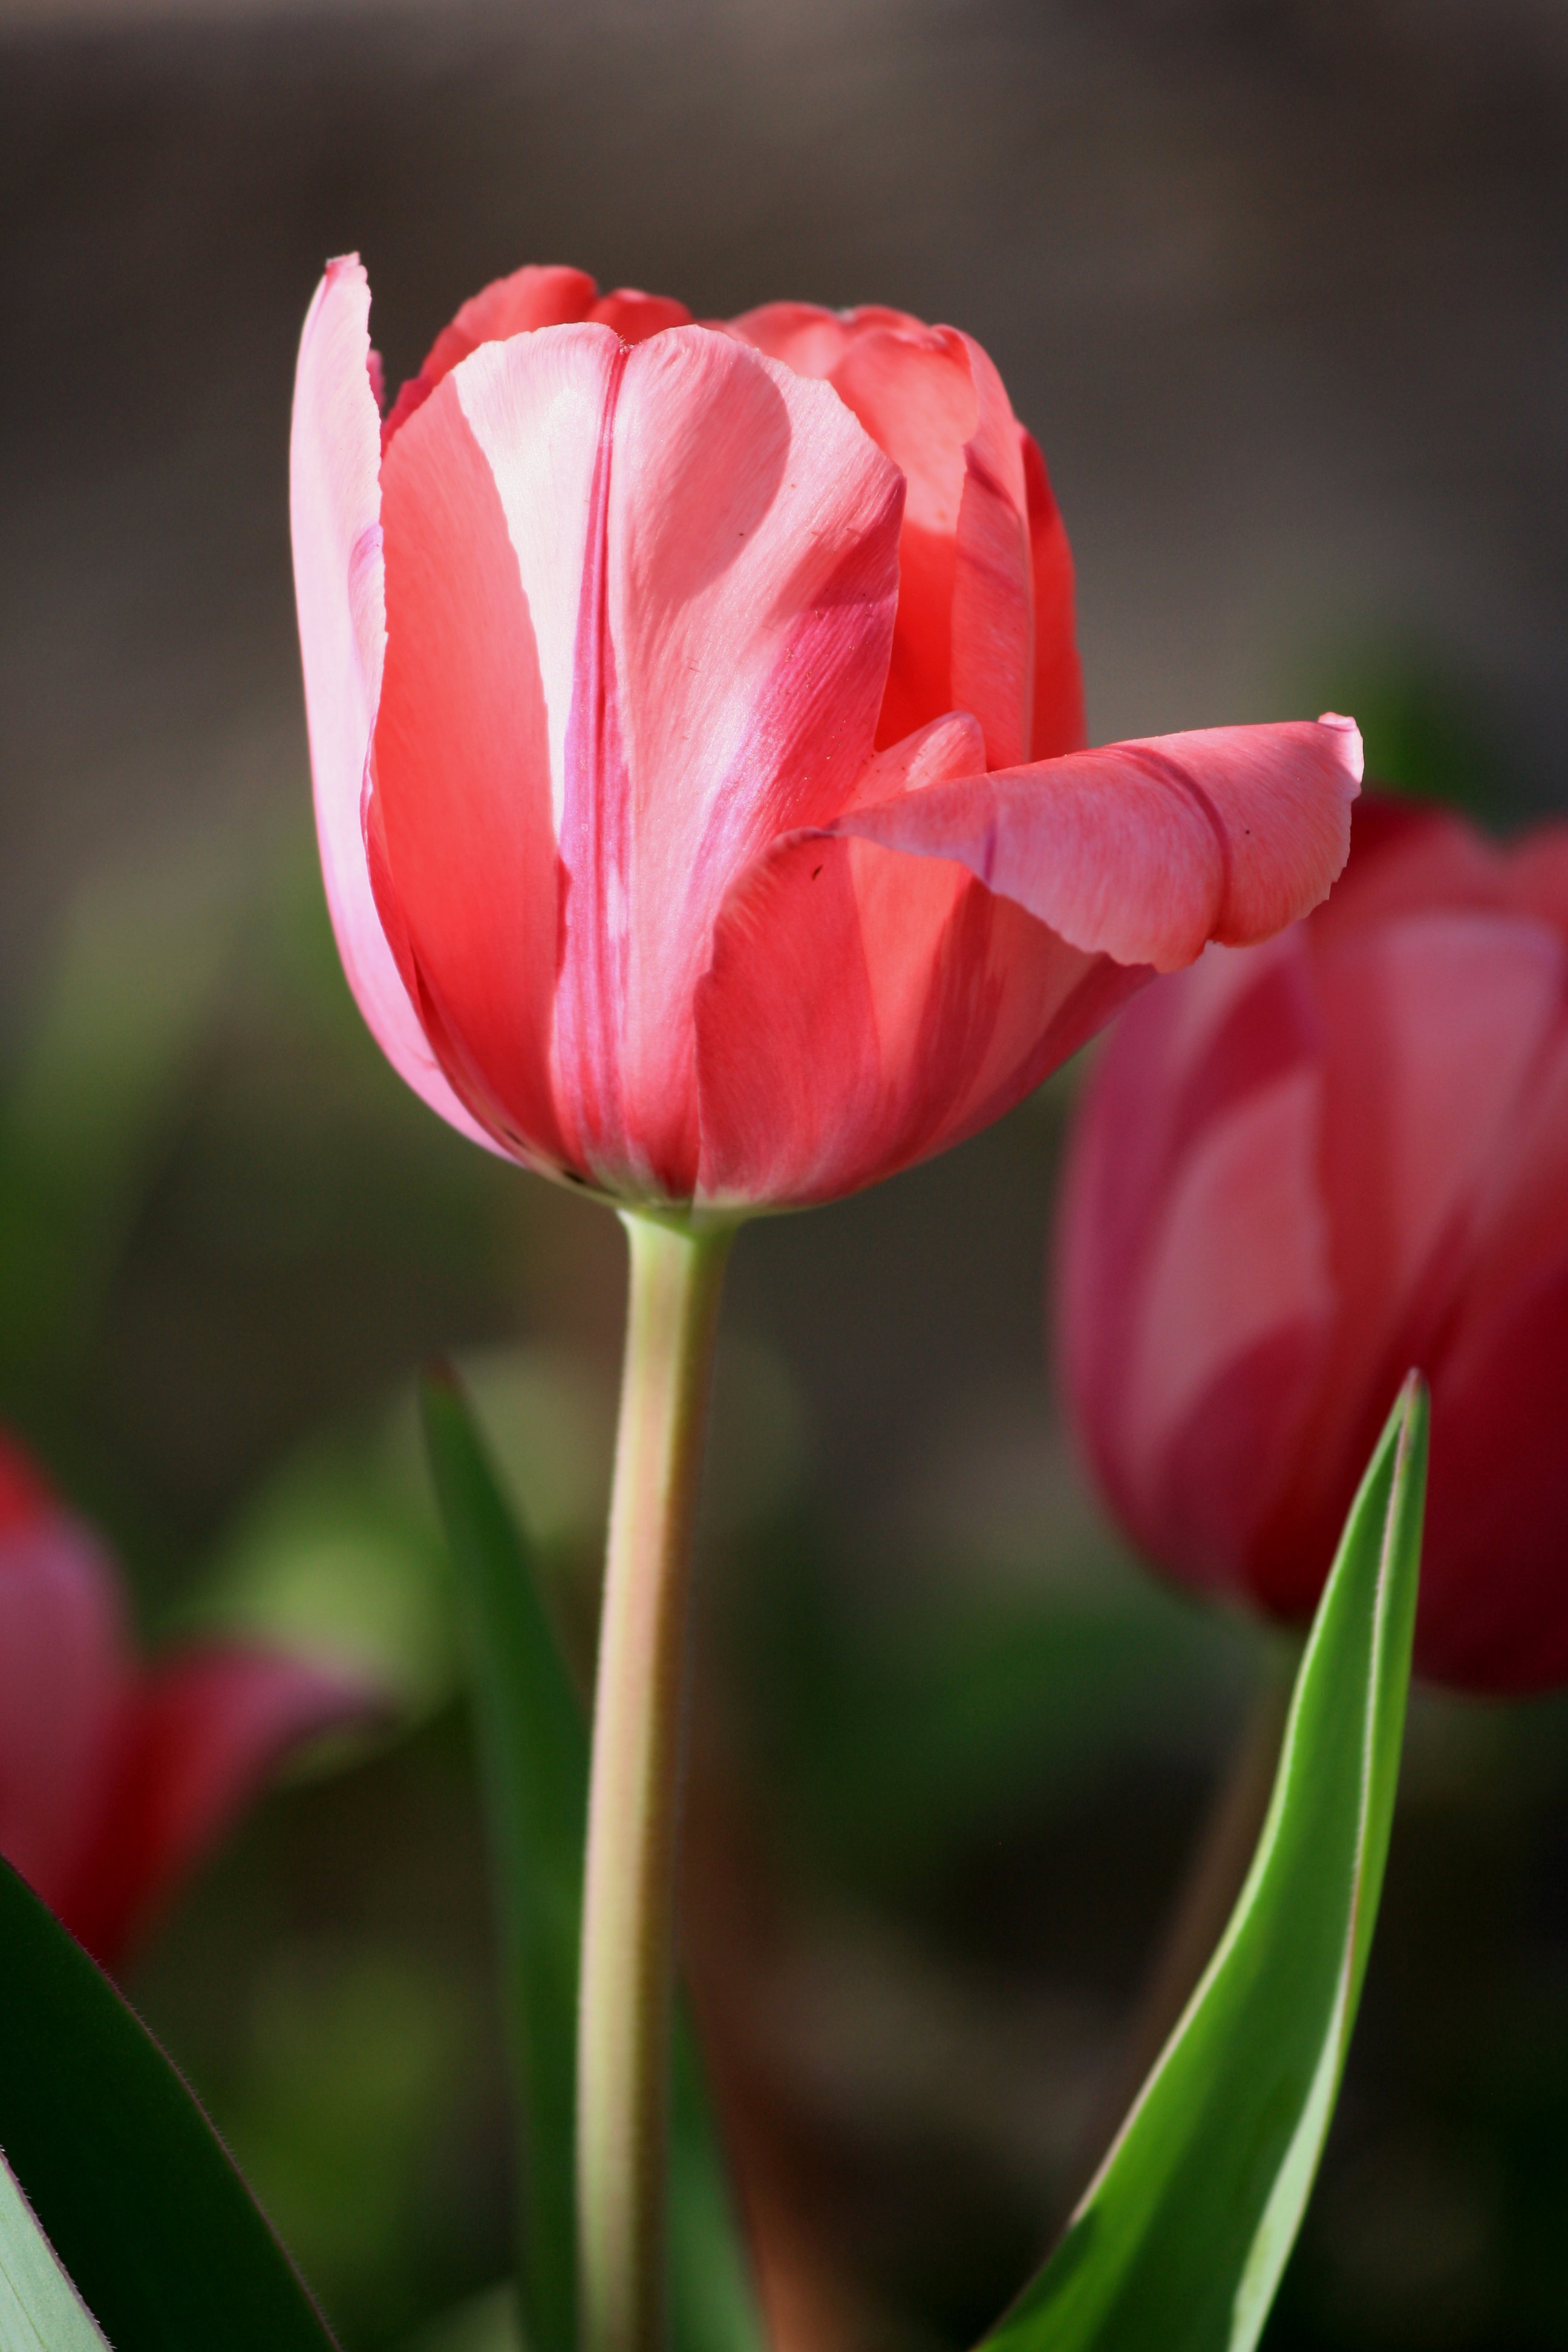 pink-tulip-with-one-petal-open.jpg